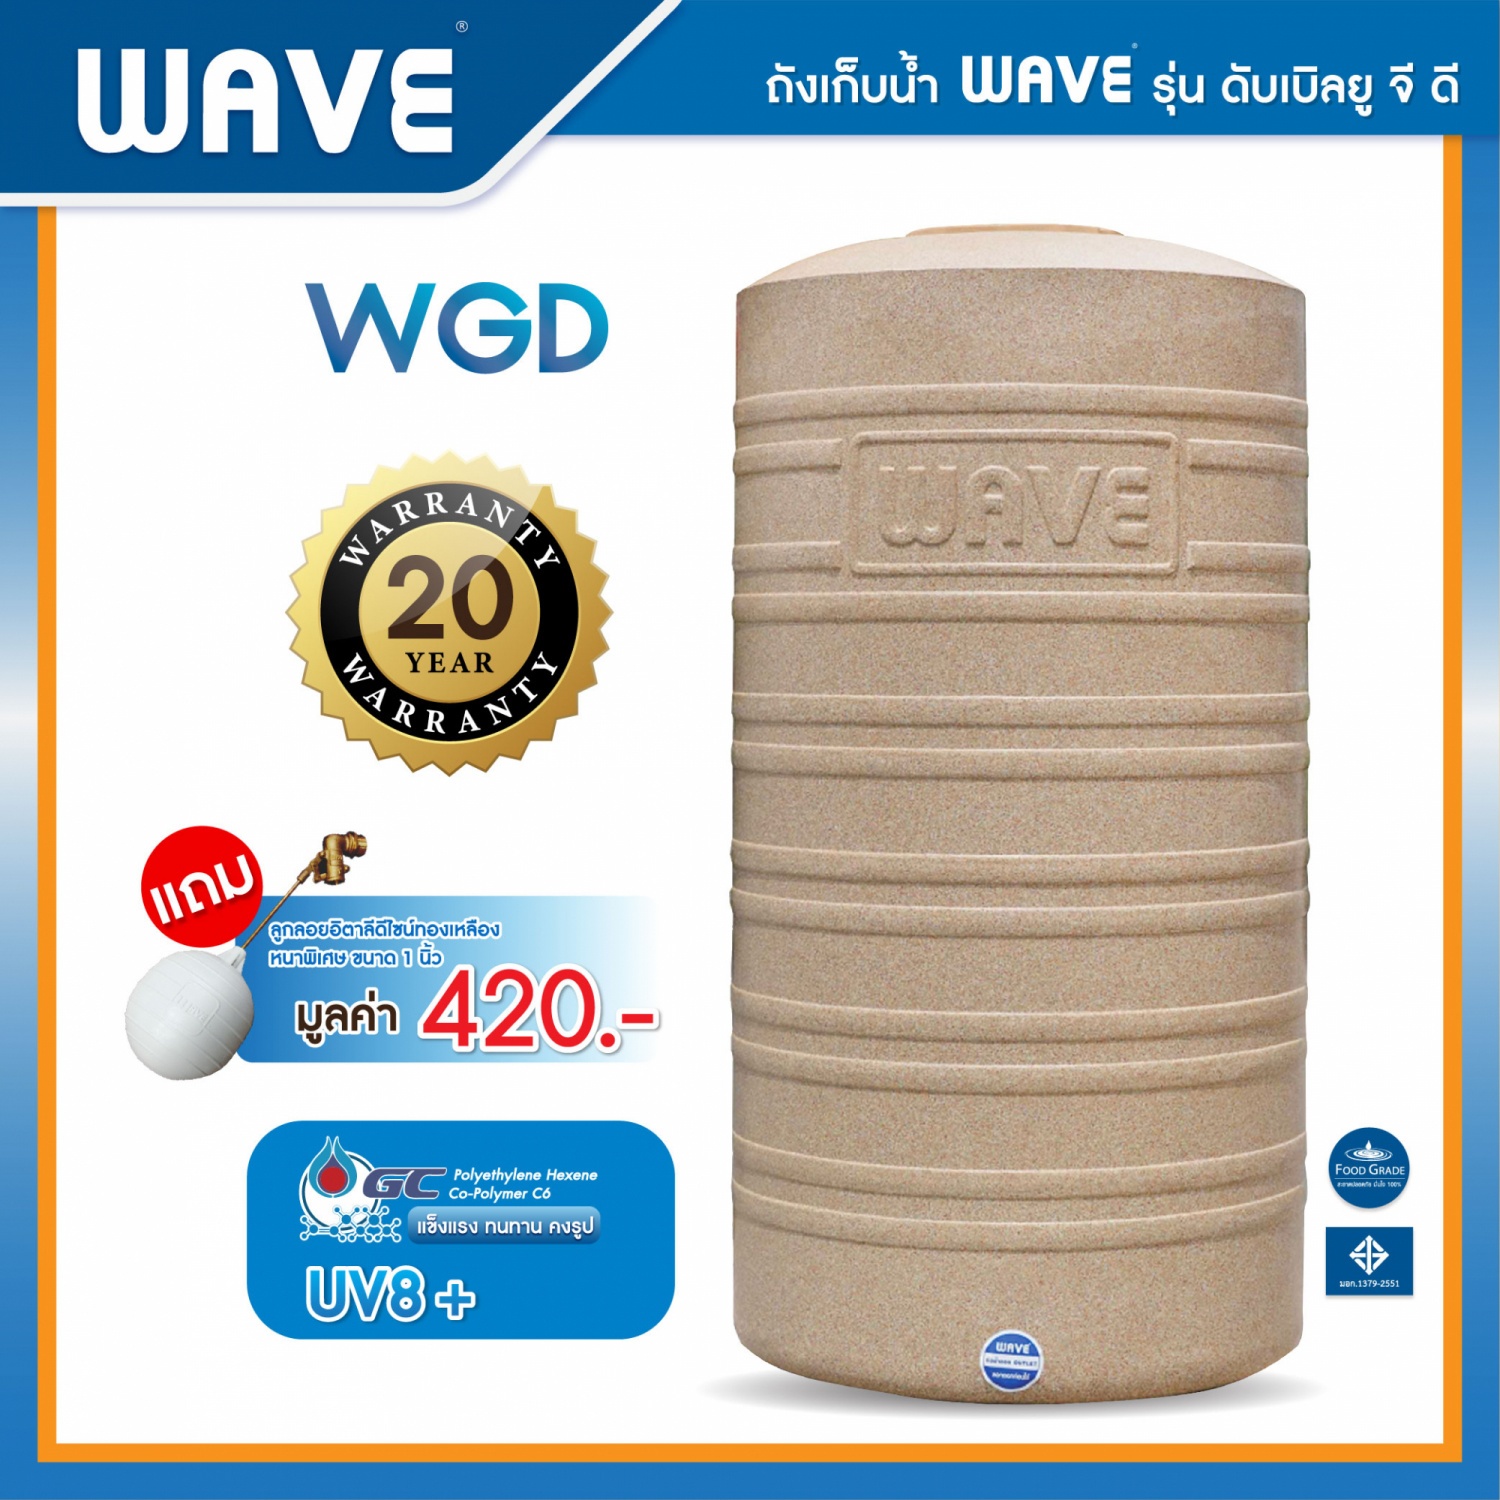 WAVE ถังเก็บน้ำบนดินรุ่น WGD 1500L.